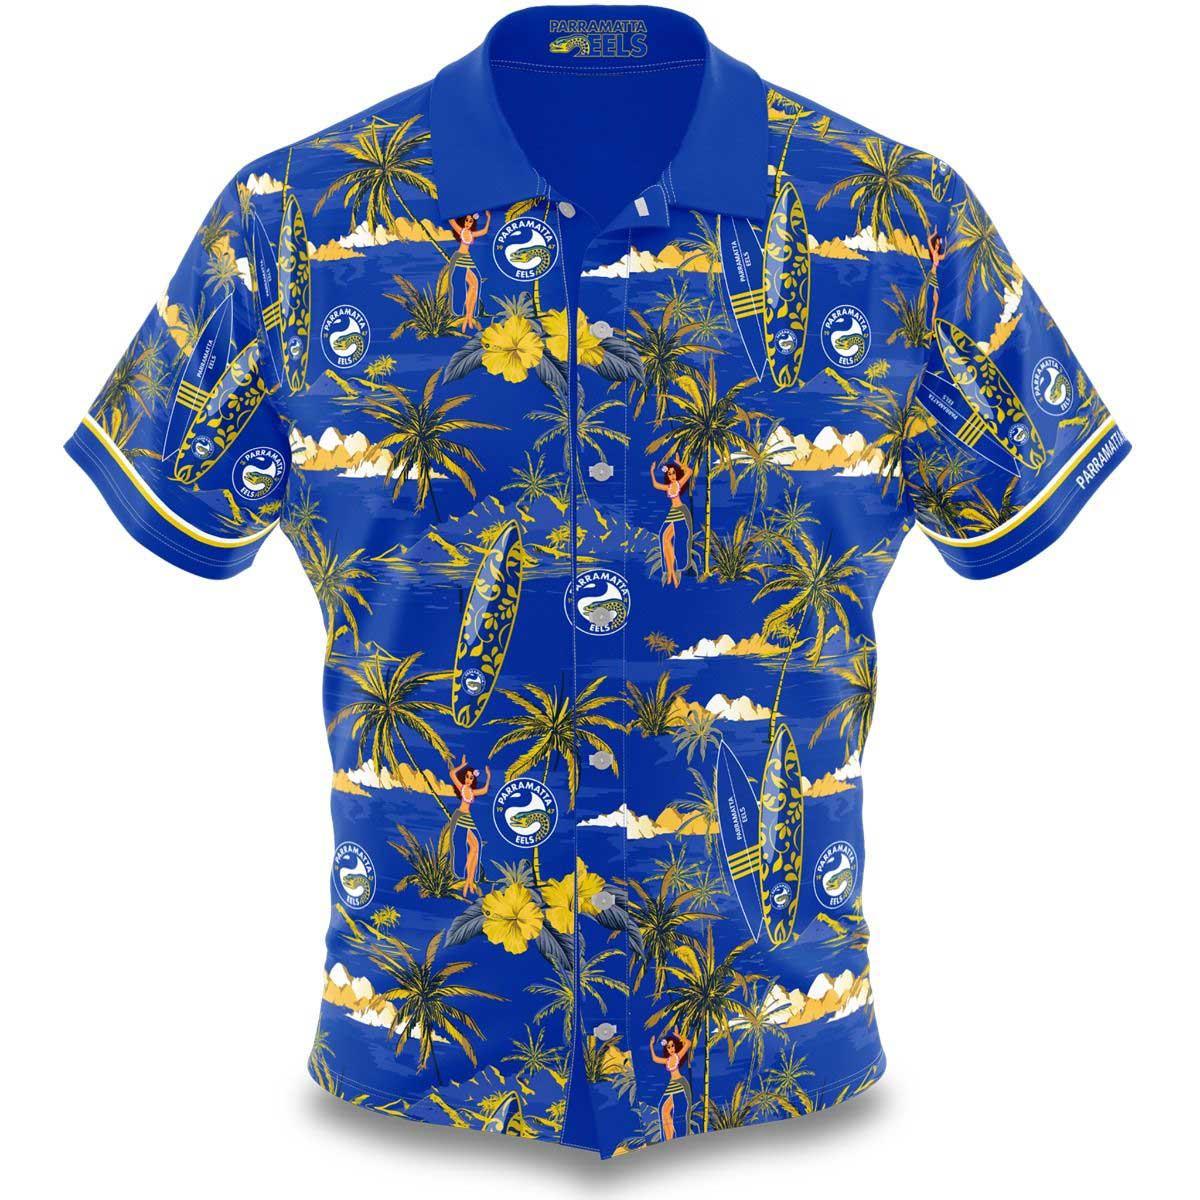 South Sydney Rabbitohs Football Team Since 1908 Vintage Hawaiian Shirt For Nrl Fans